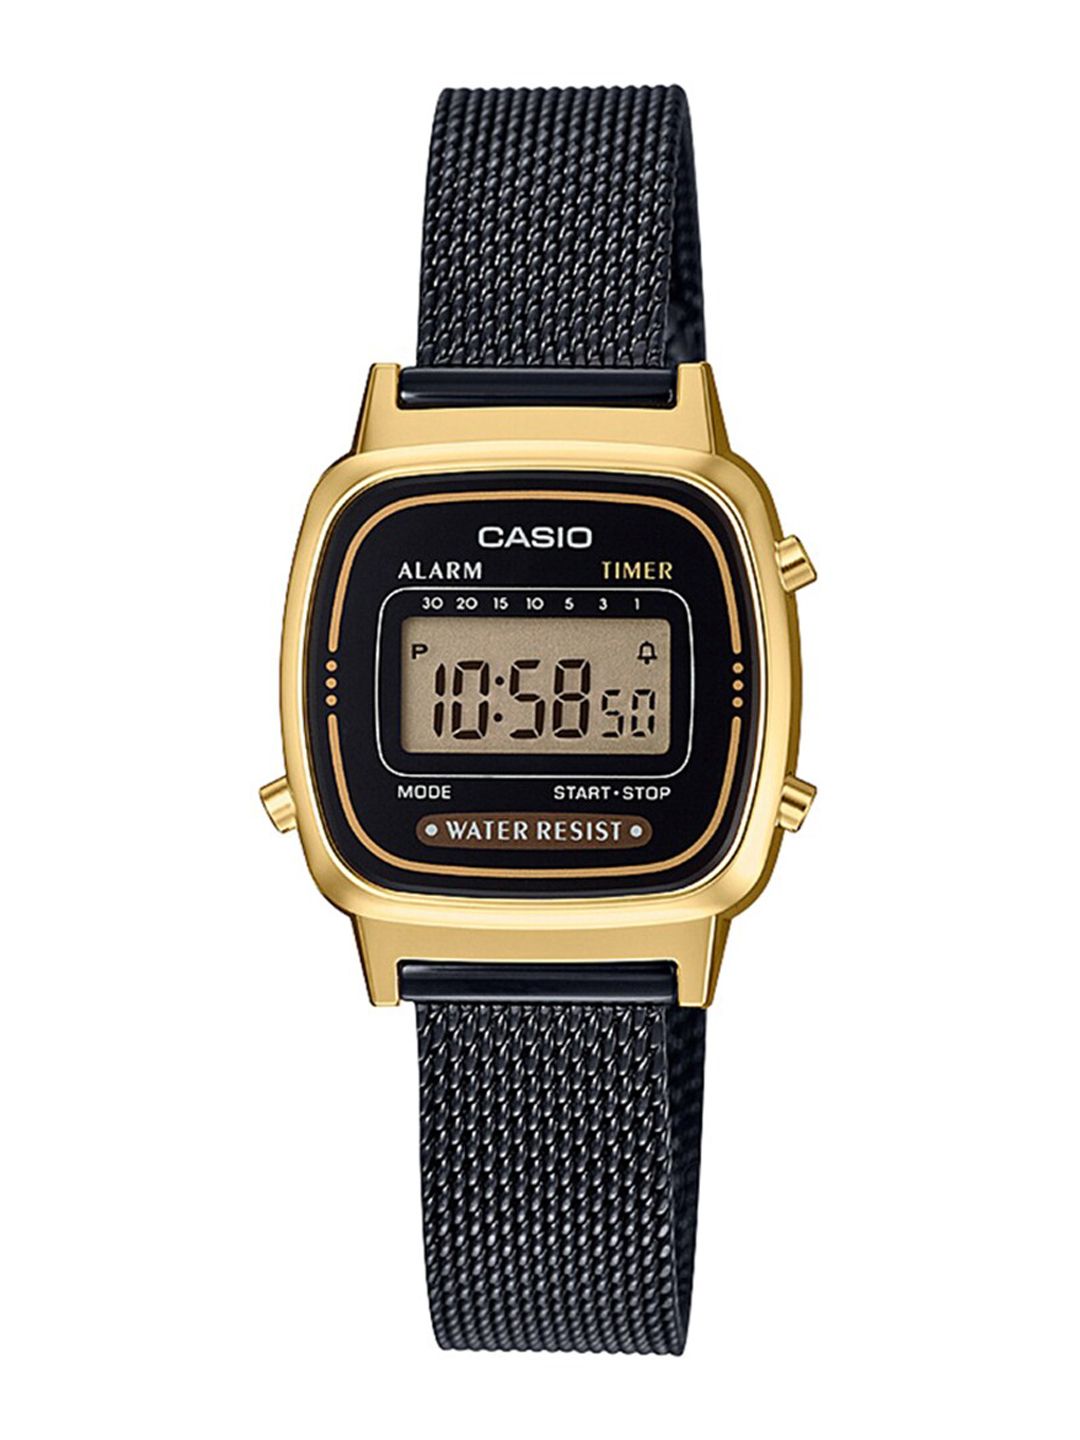 CASIO Unisex Gold-Toned Digital Watch D201 Price in India